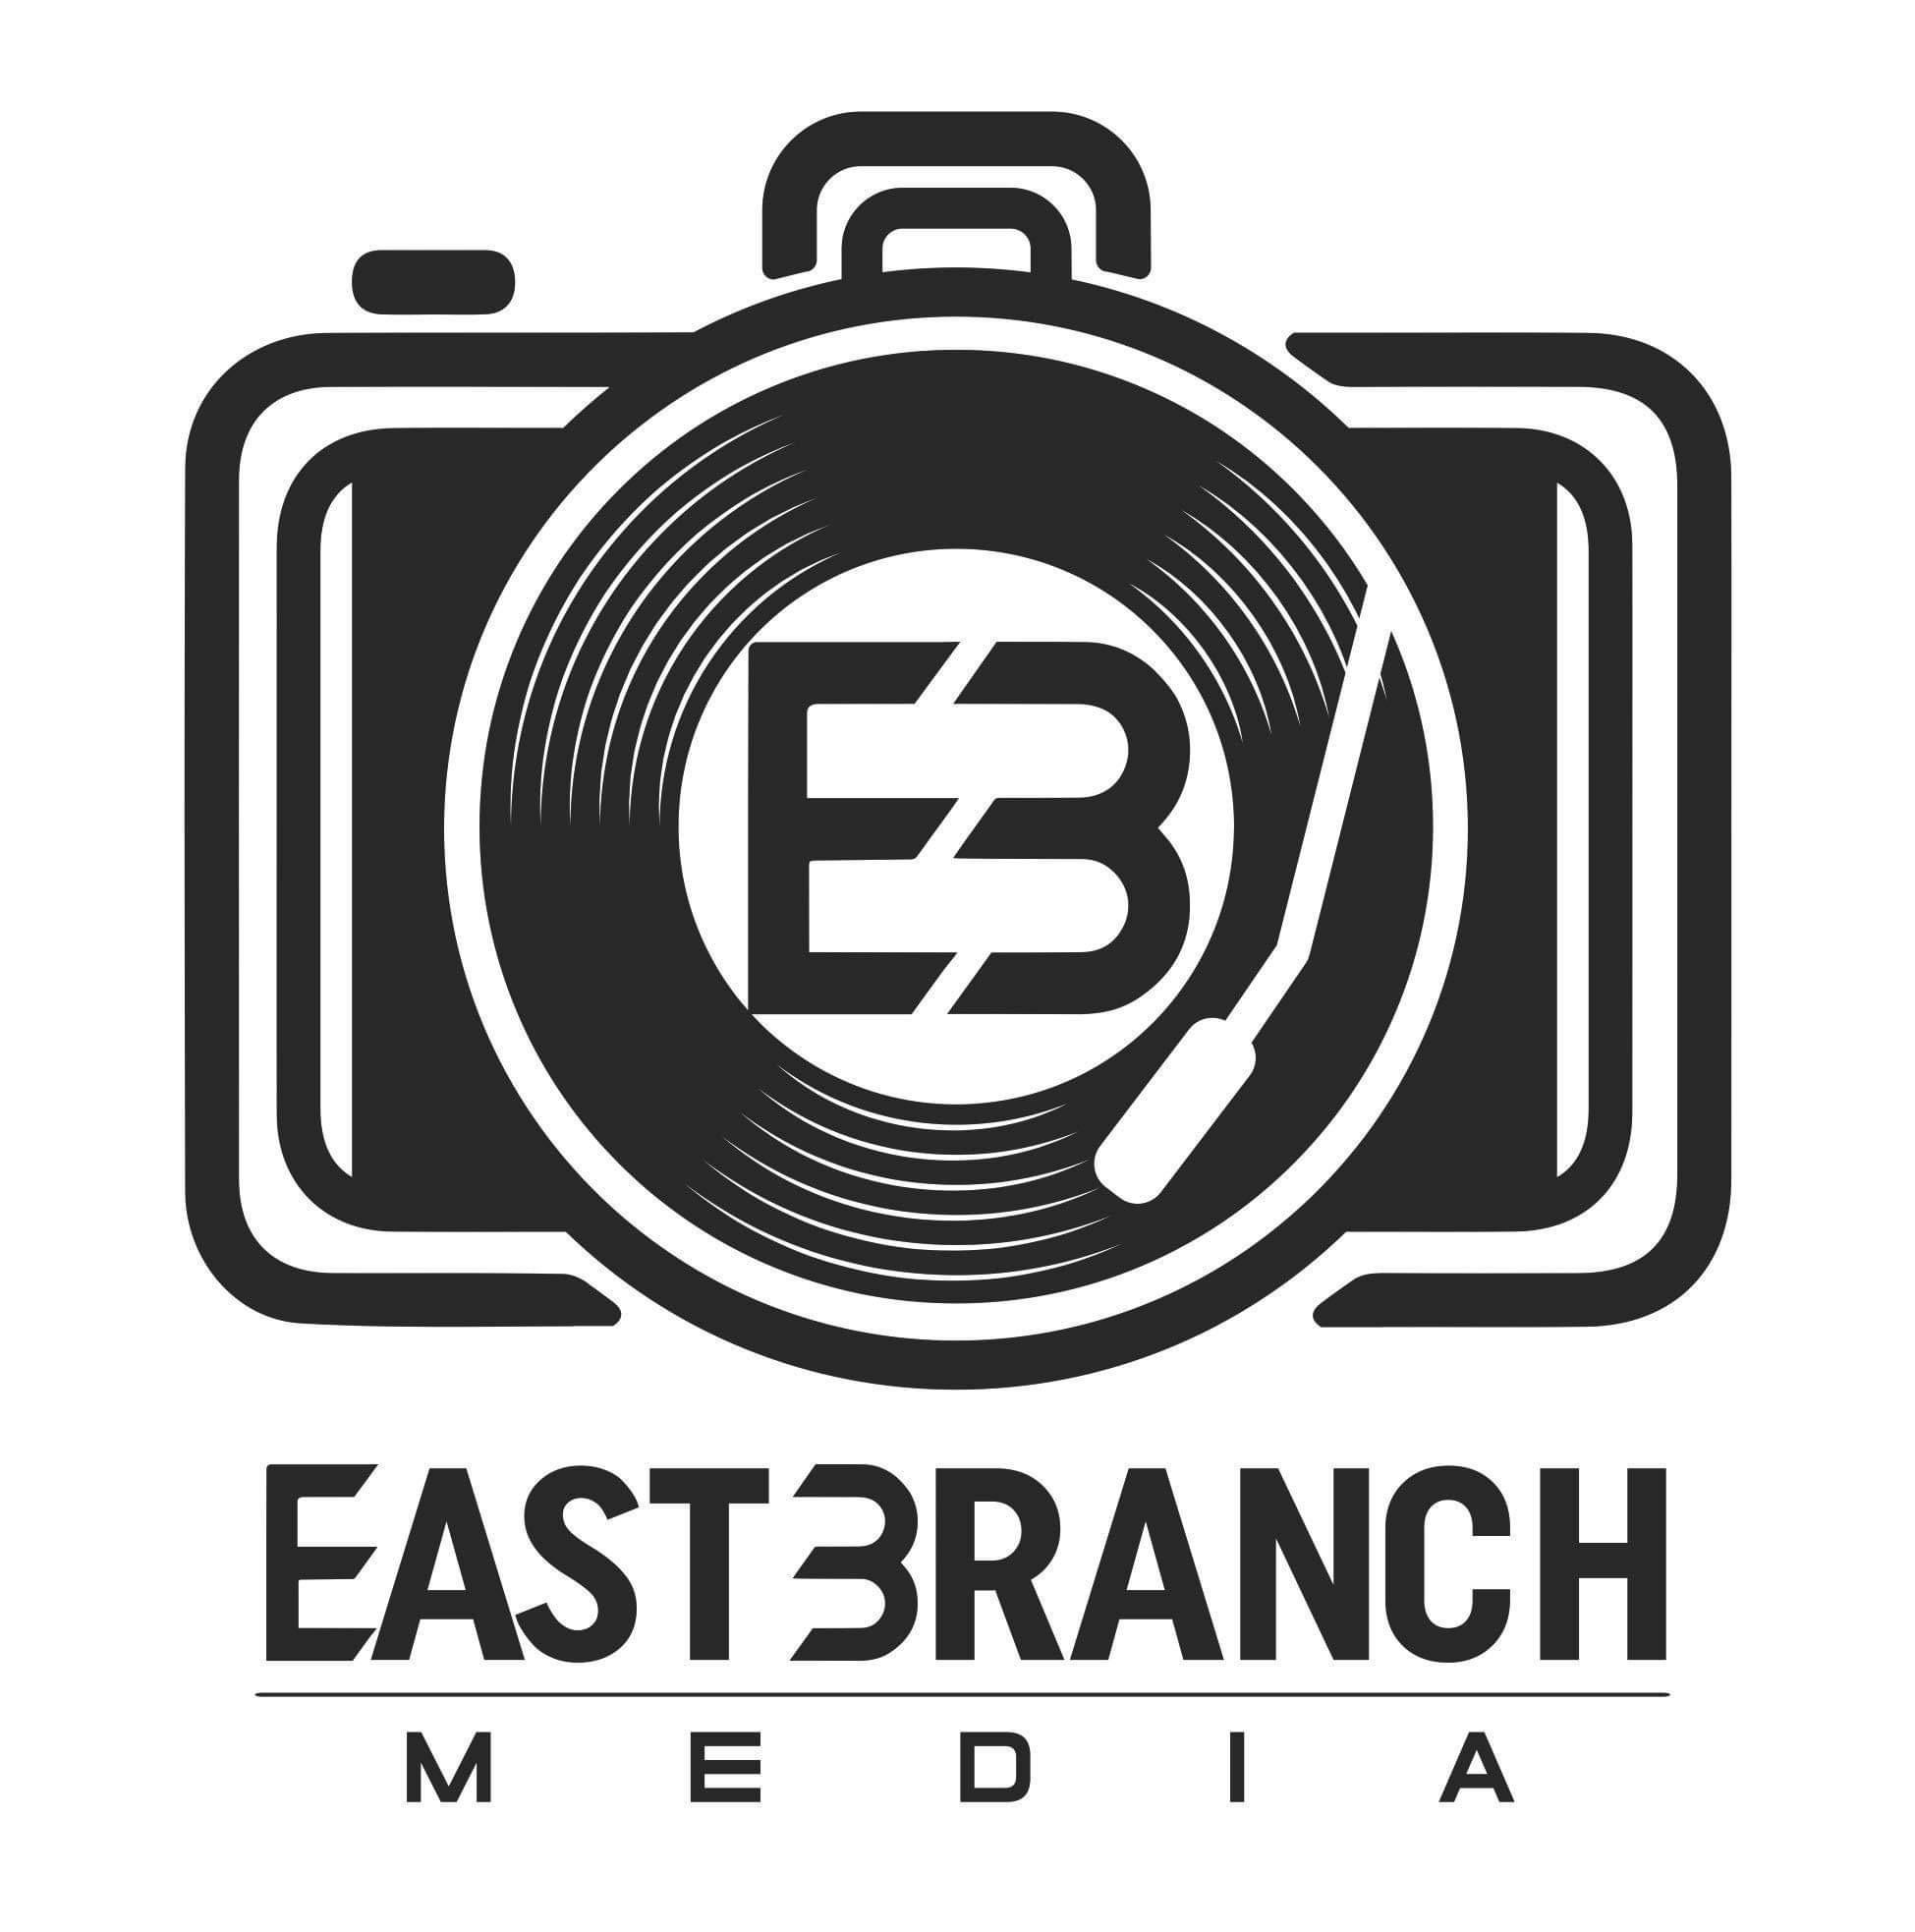 EAST BRANCH MEDIA